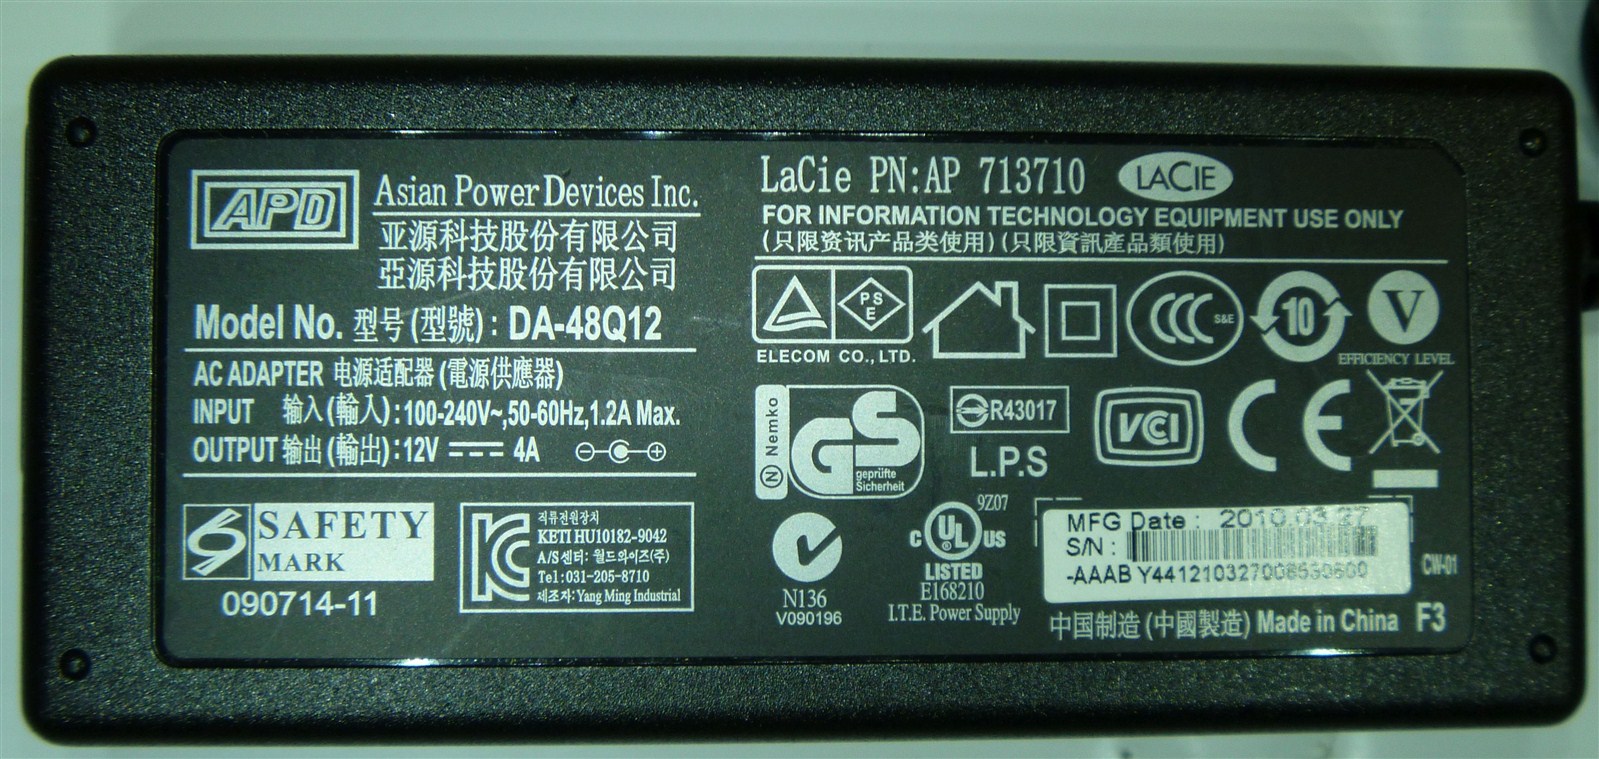 12V DC 4A LaCie 713710 APD Asian Power Devices DA-48Q12 AC Adapter - Click Image to Close